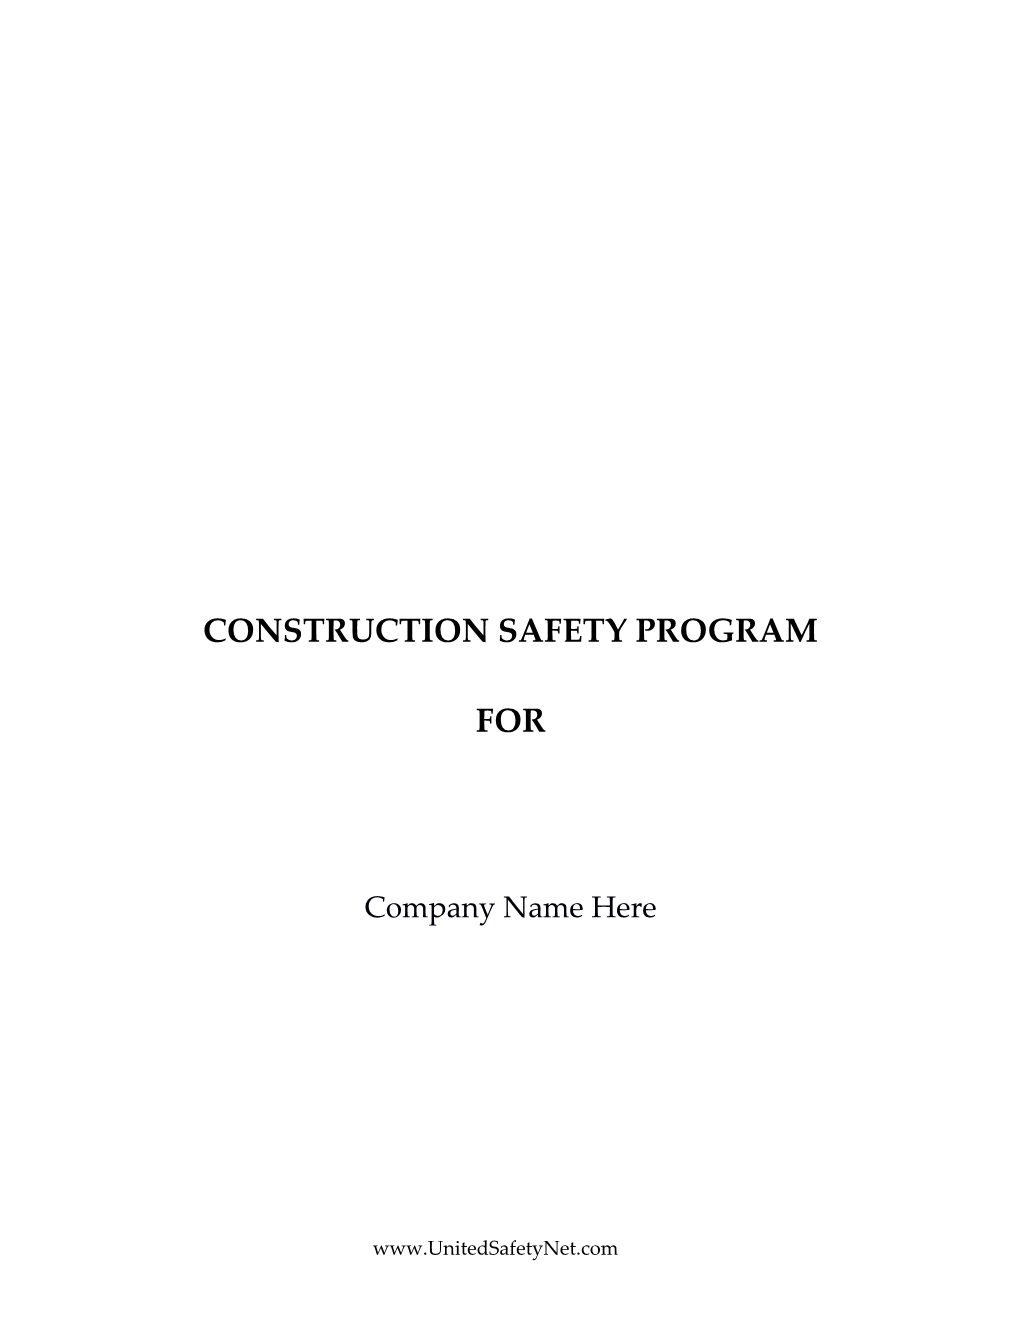 Sample Construction Safety Program